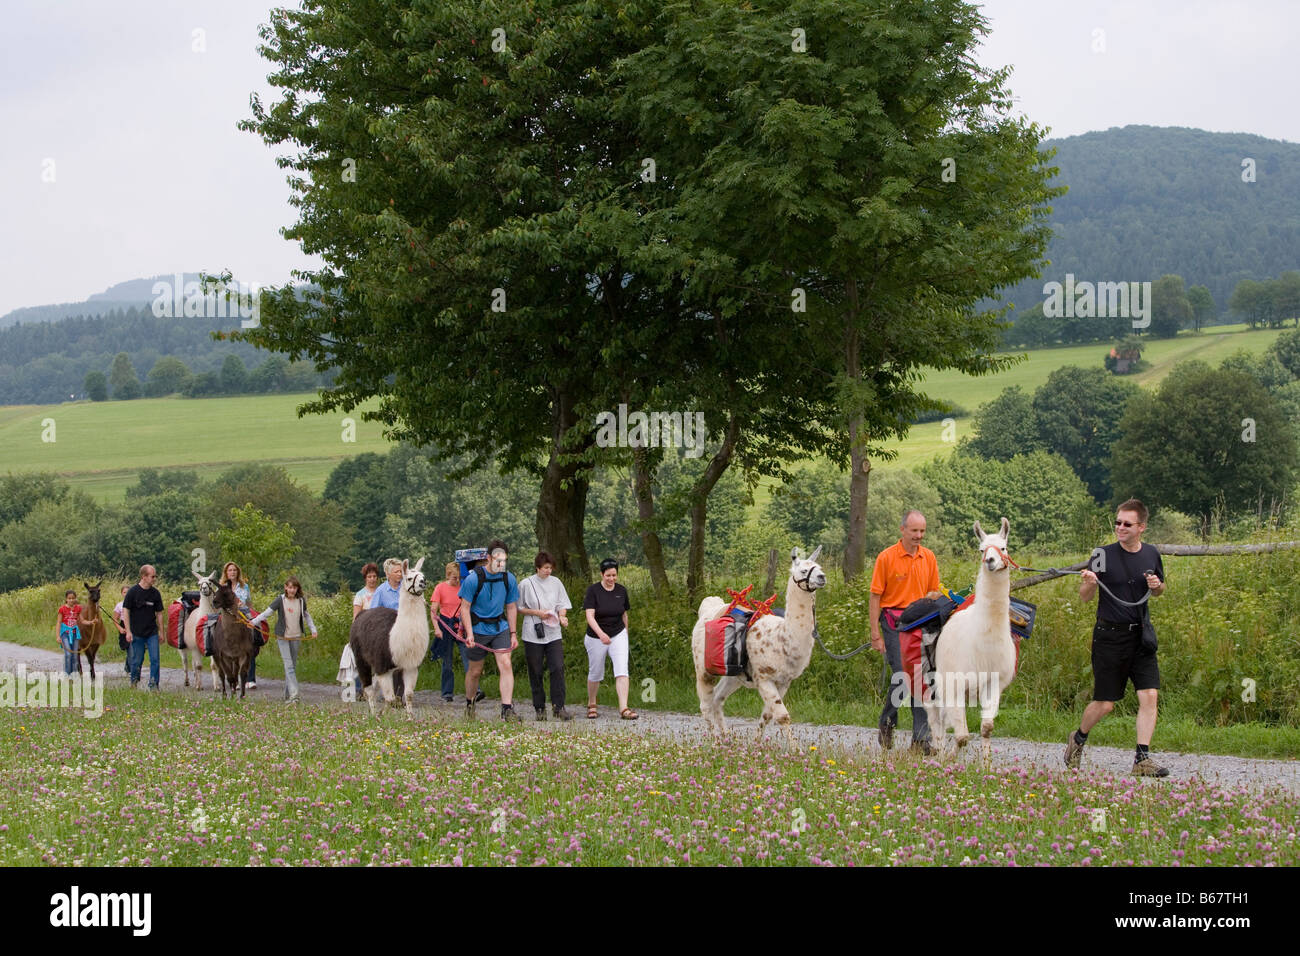 Un gruppo di persone su un tour escursionistico con llama, Nuedlings Rhoen Lama Trekking, Poppenhausen, Rhoen, Hesse, Germania Foto Stock